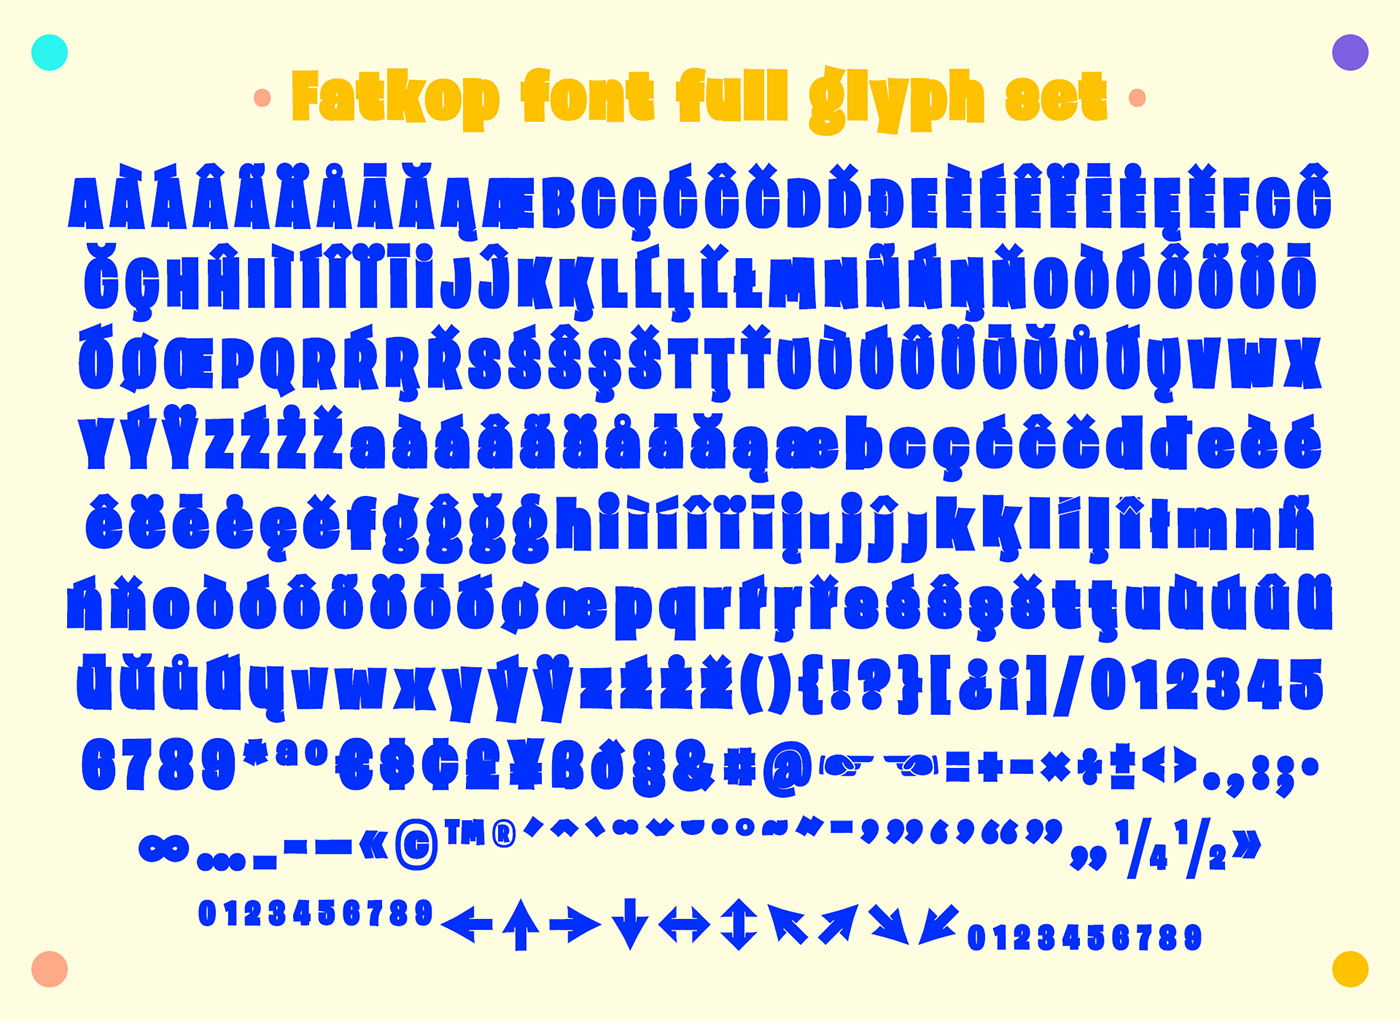 bold Cop fat font logos print robber titles Typeface Braggy